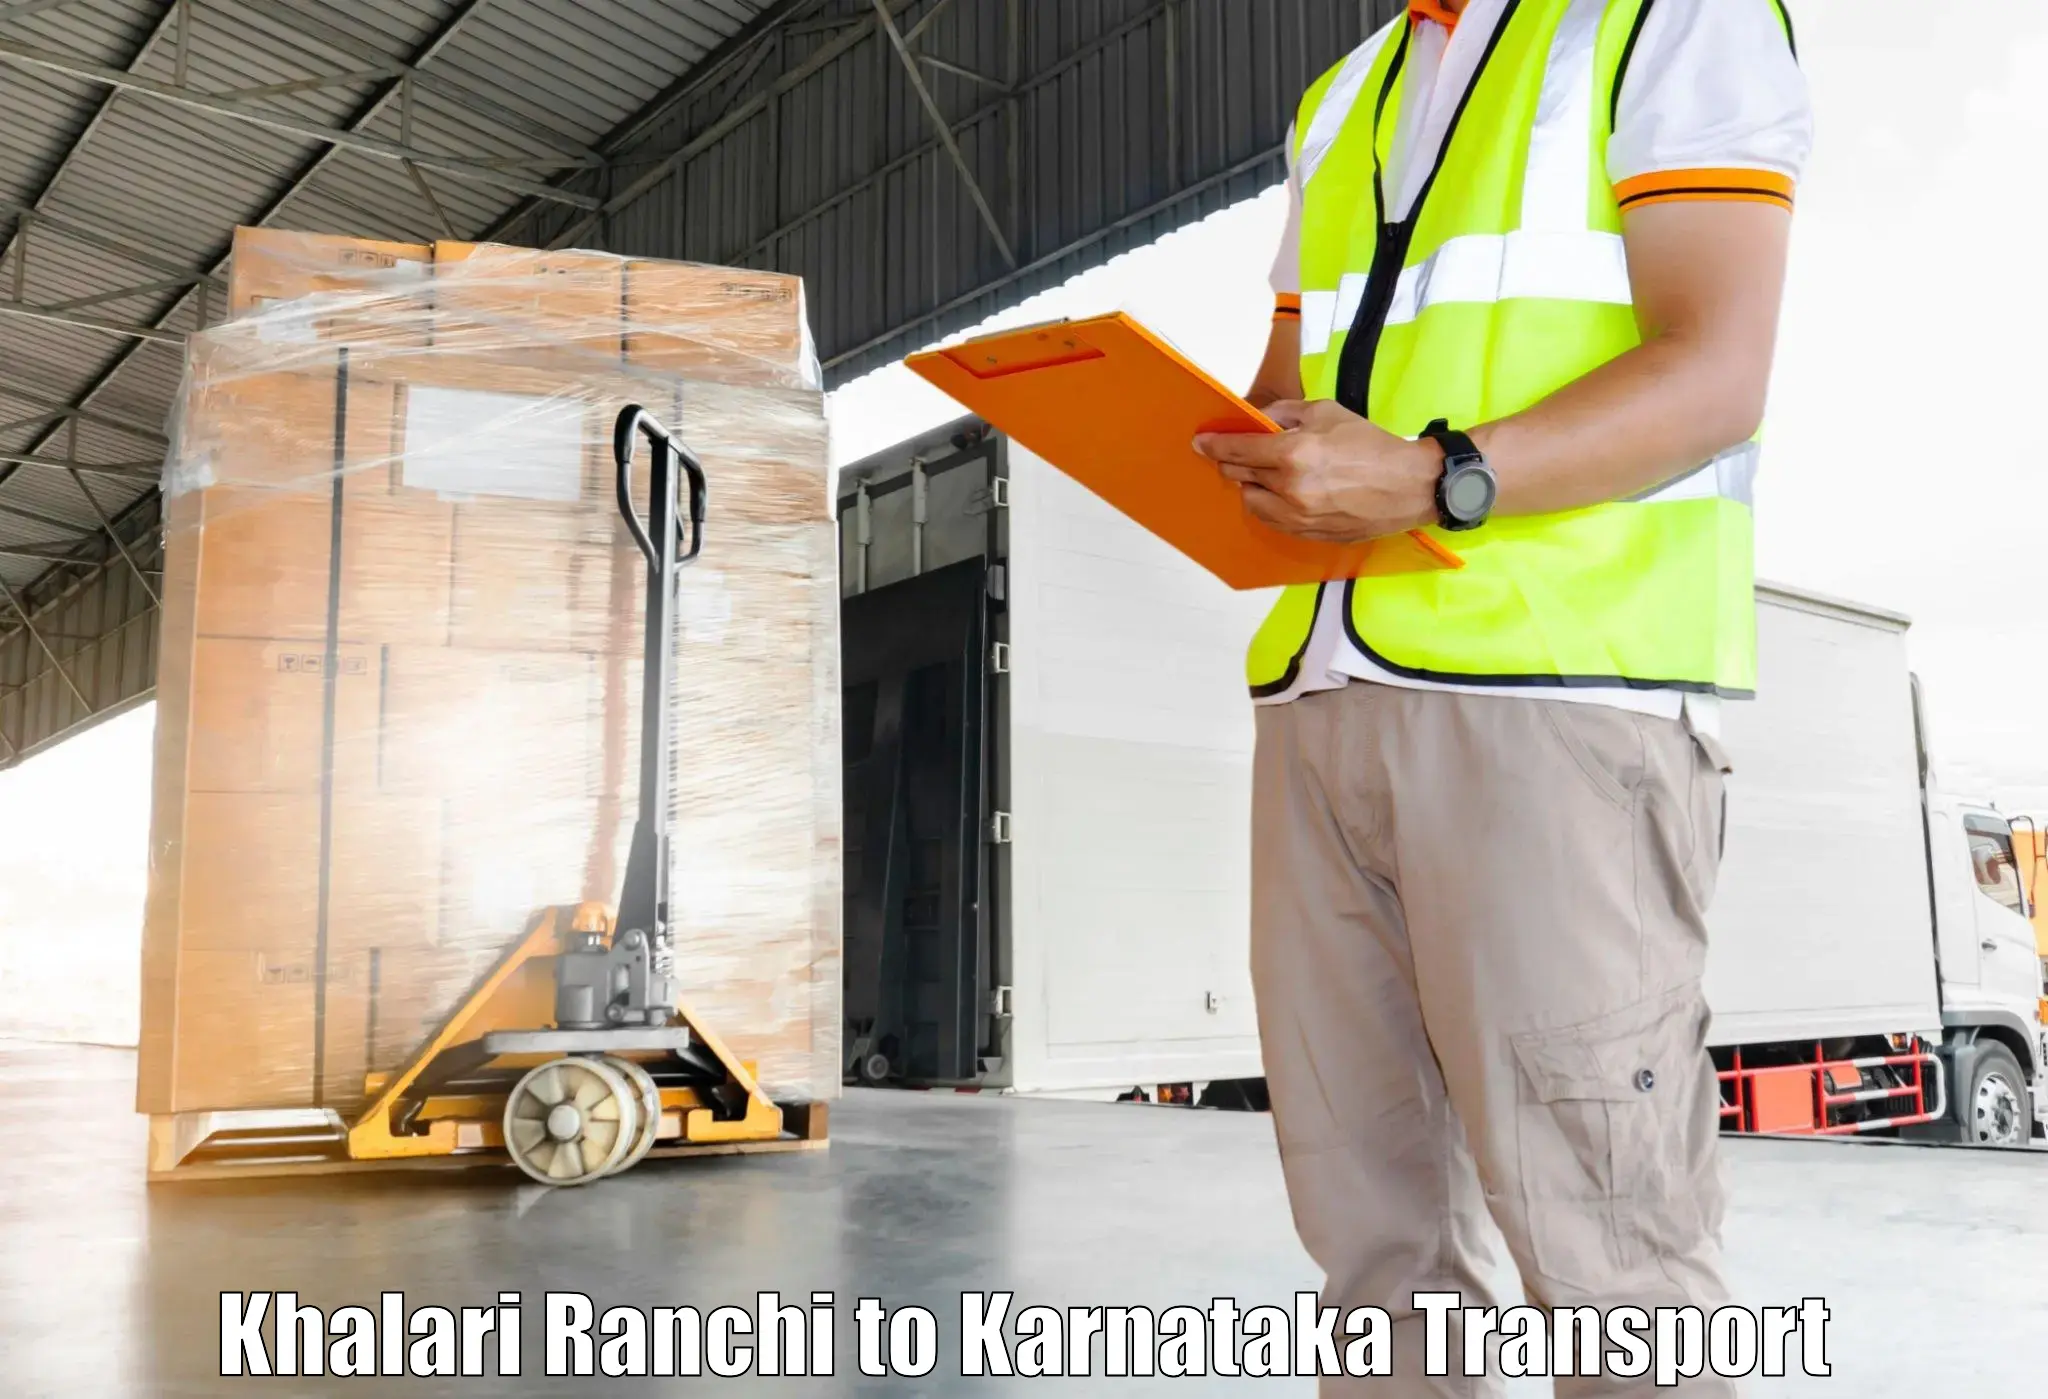 Lorry transport service Khalari Ranchi to Thirthahalli